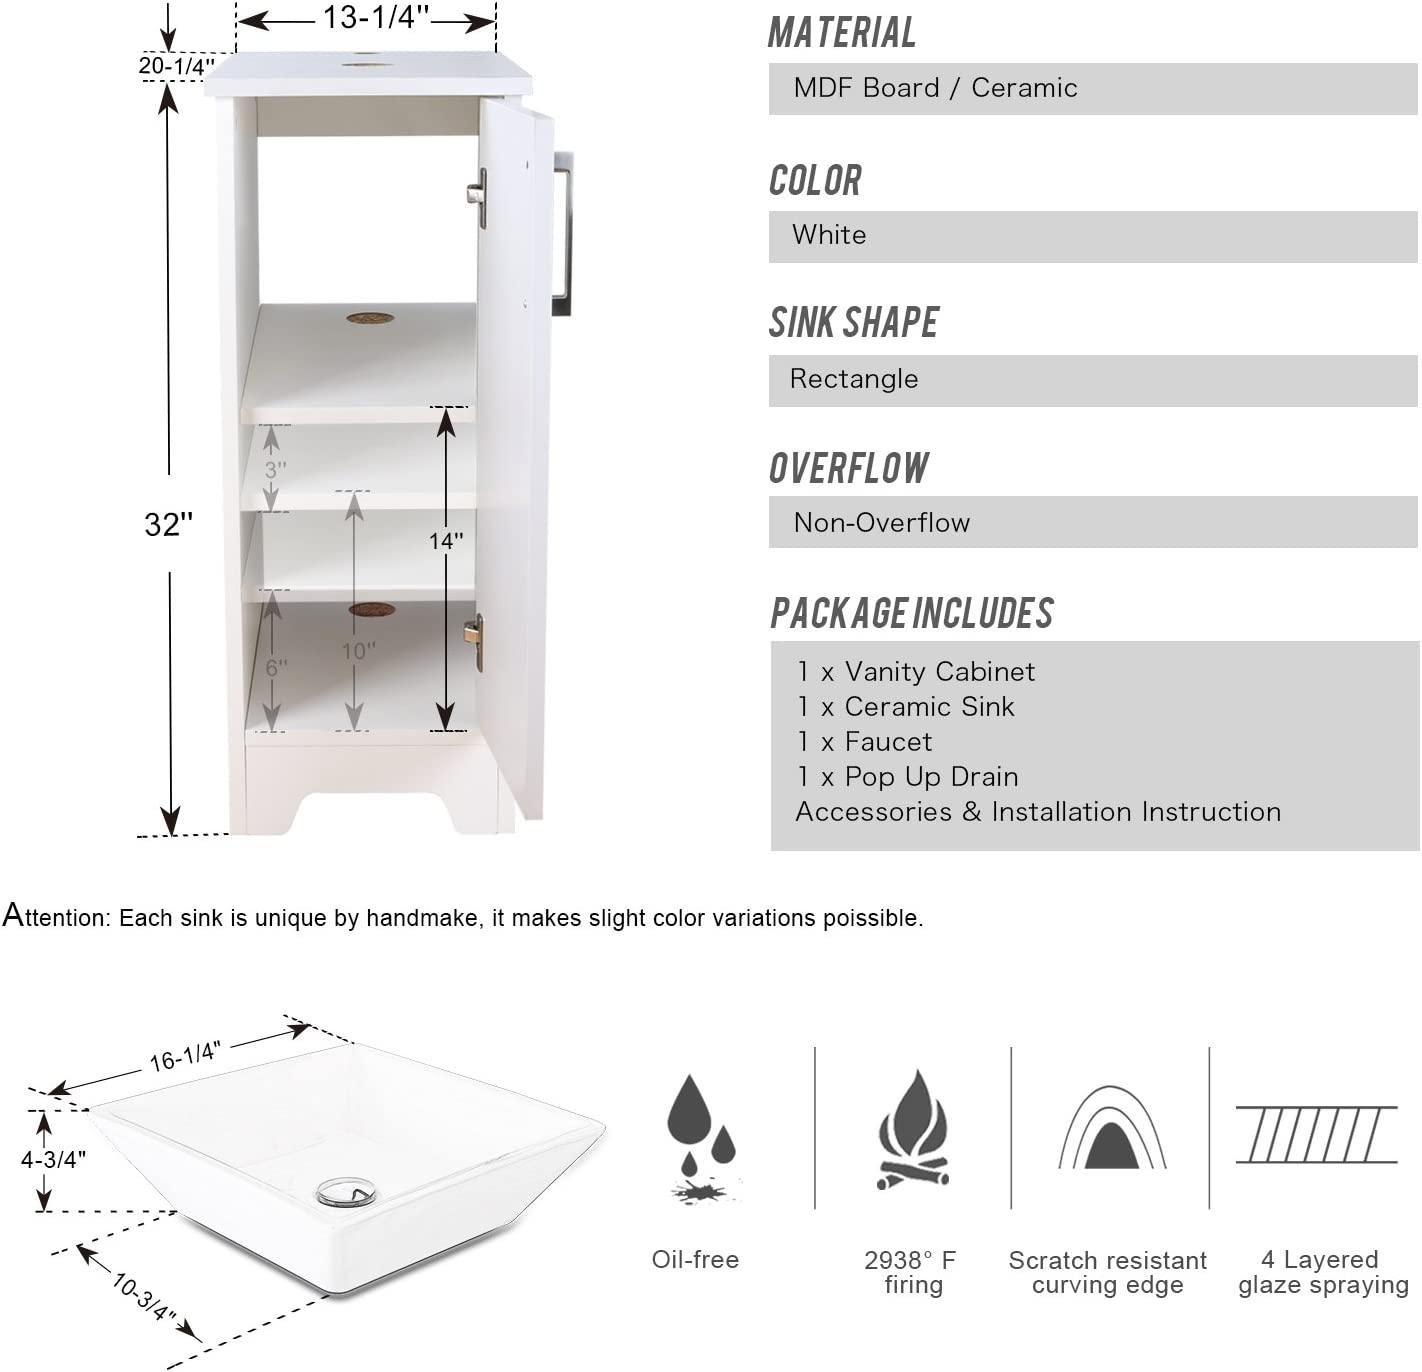 Eclife 12 Bathroom Cabinet 3 Drawer Organizer Free Standing Single Va